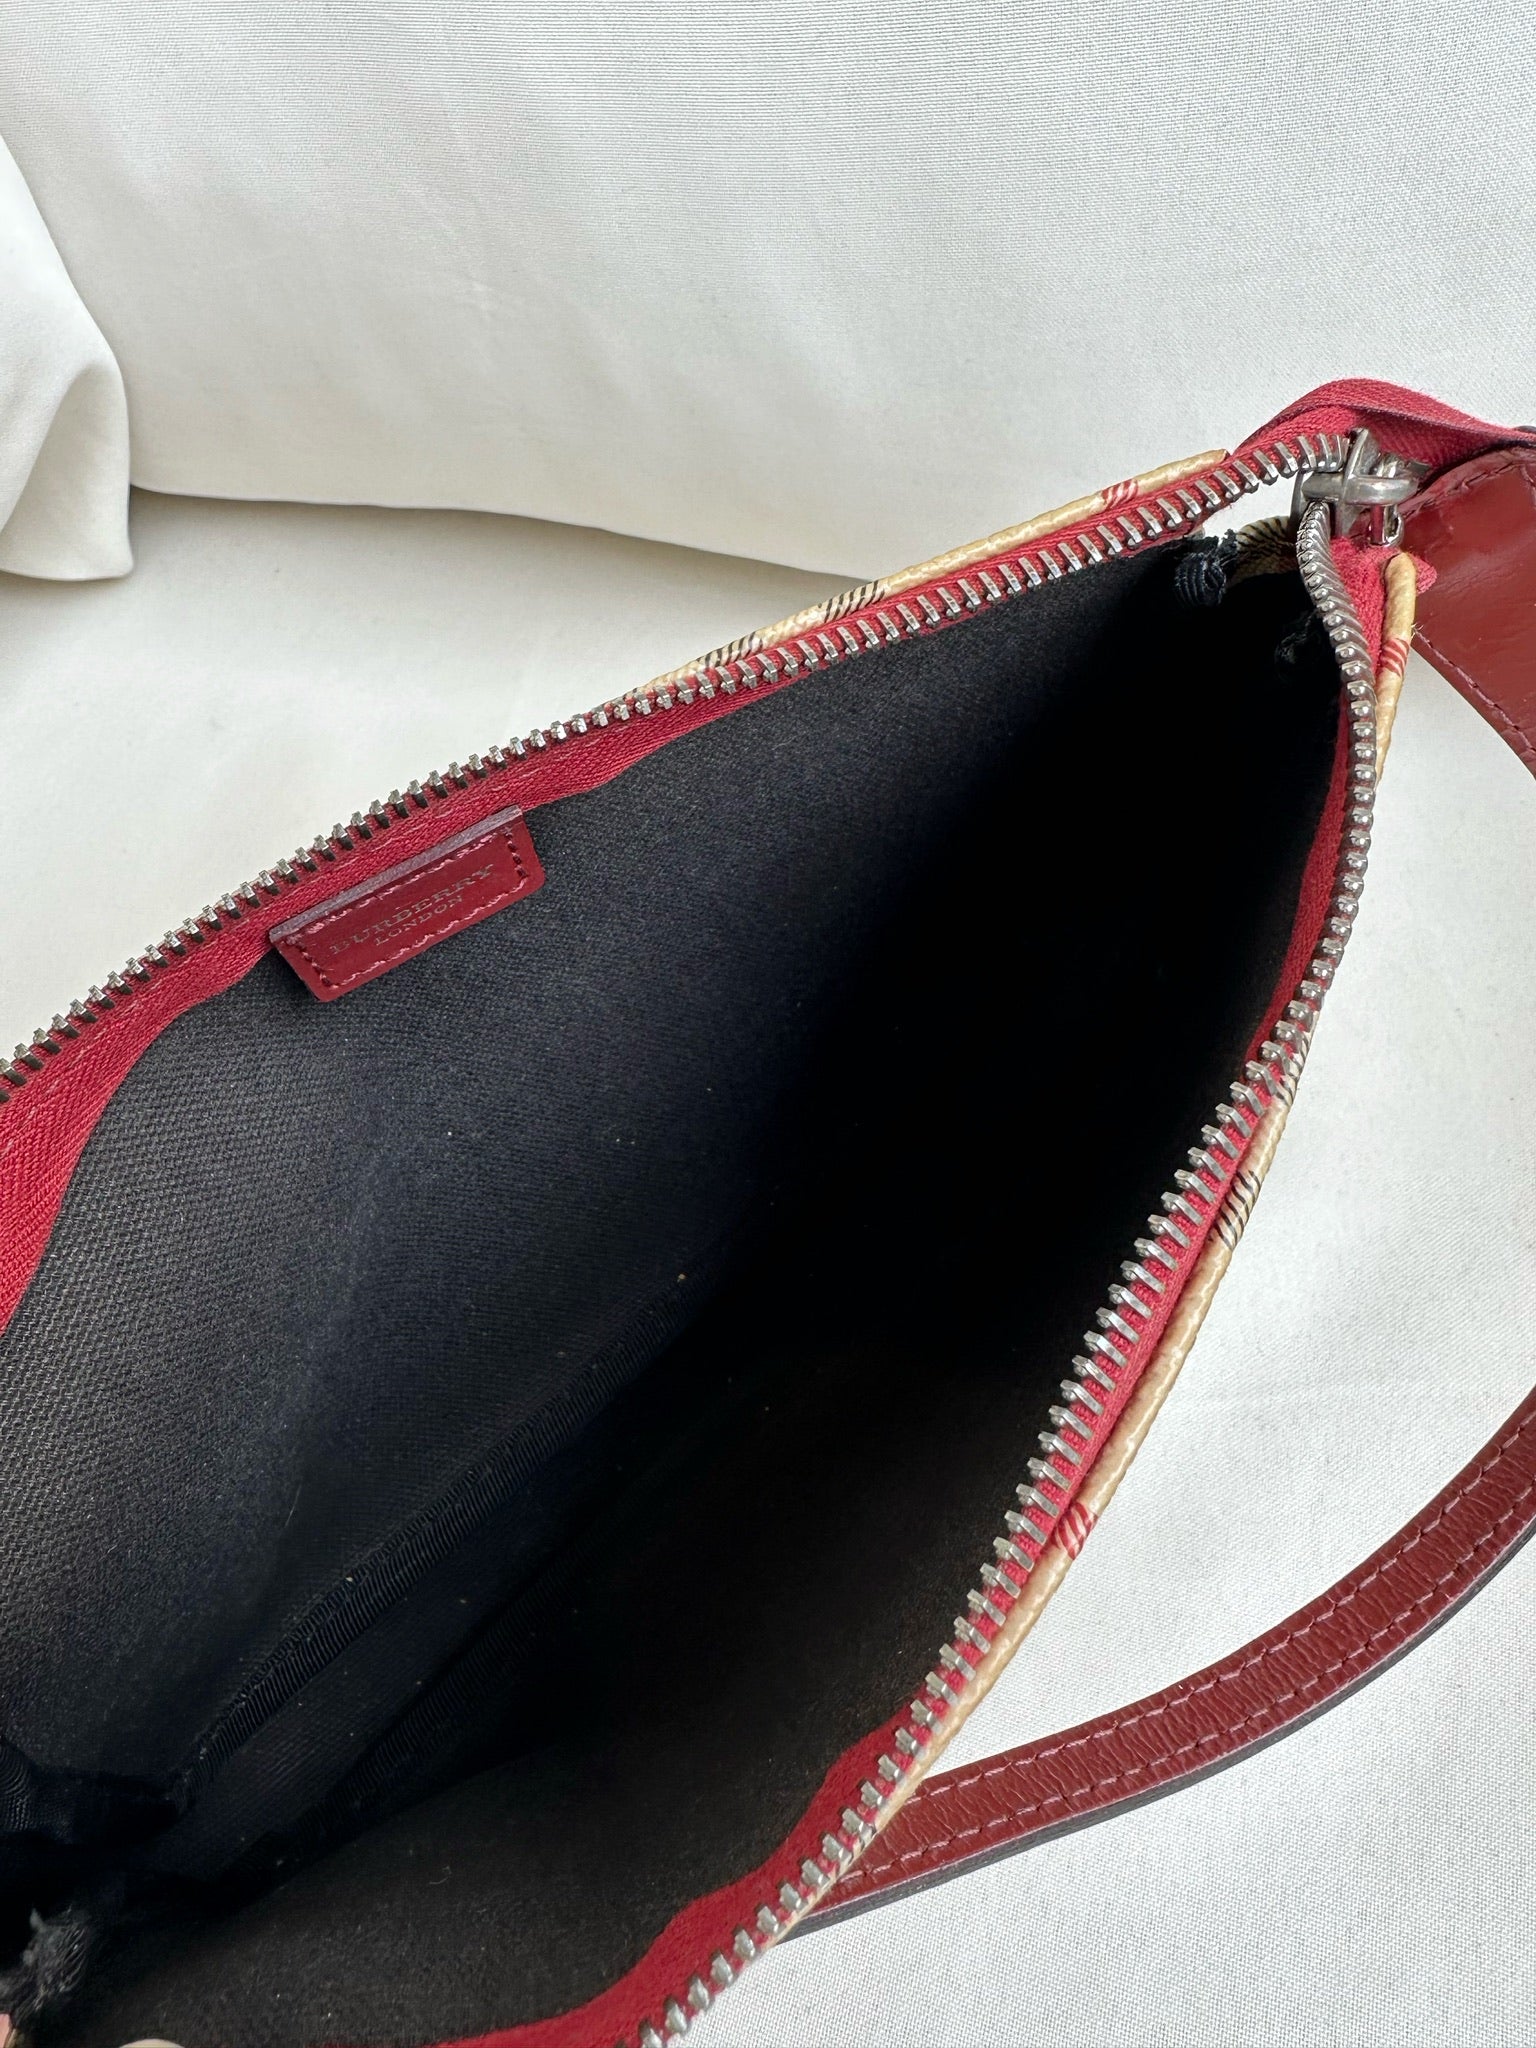 Authentic Burberry bag #nova check pochette#prelovedburberrybag